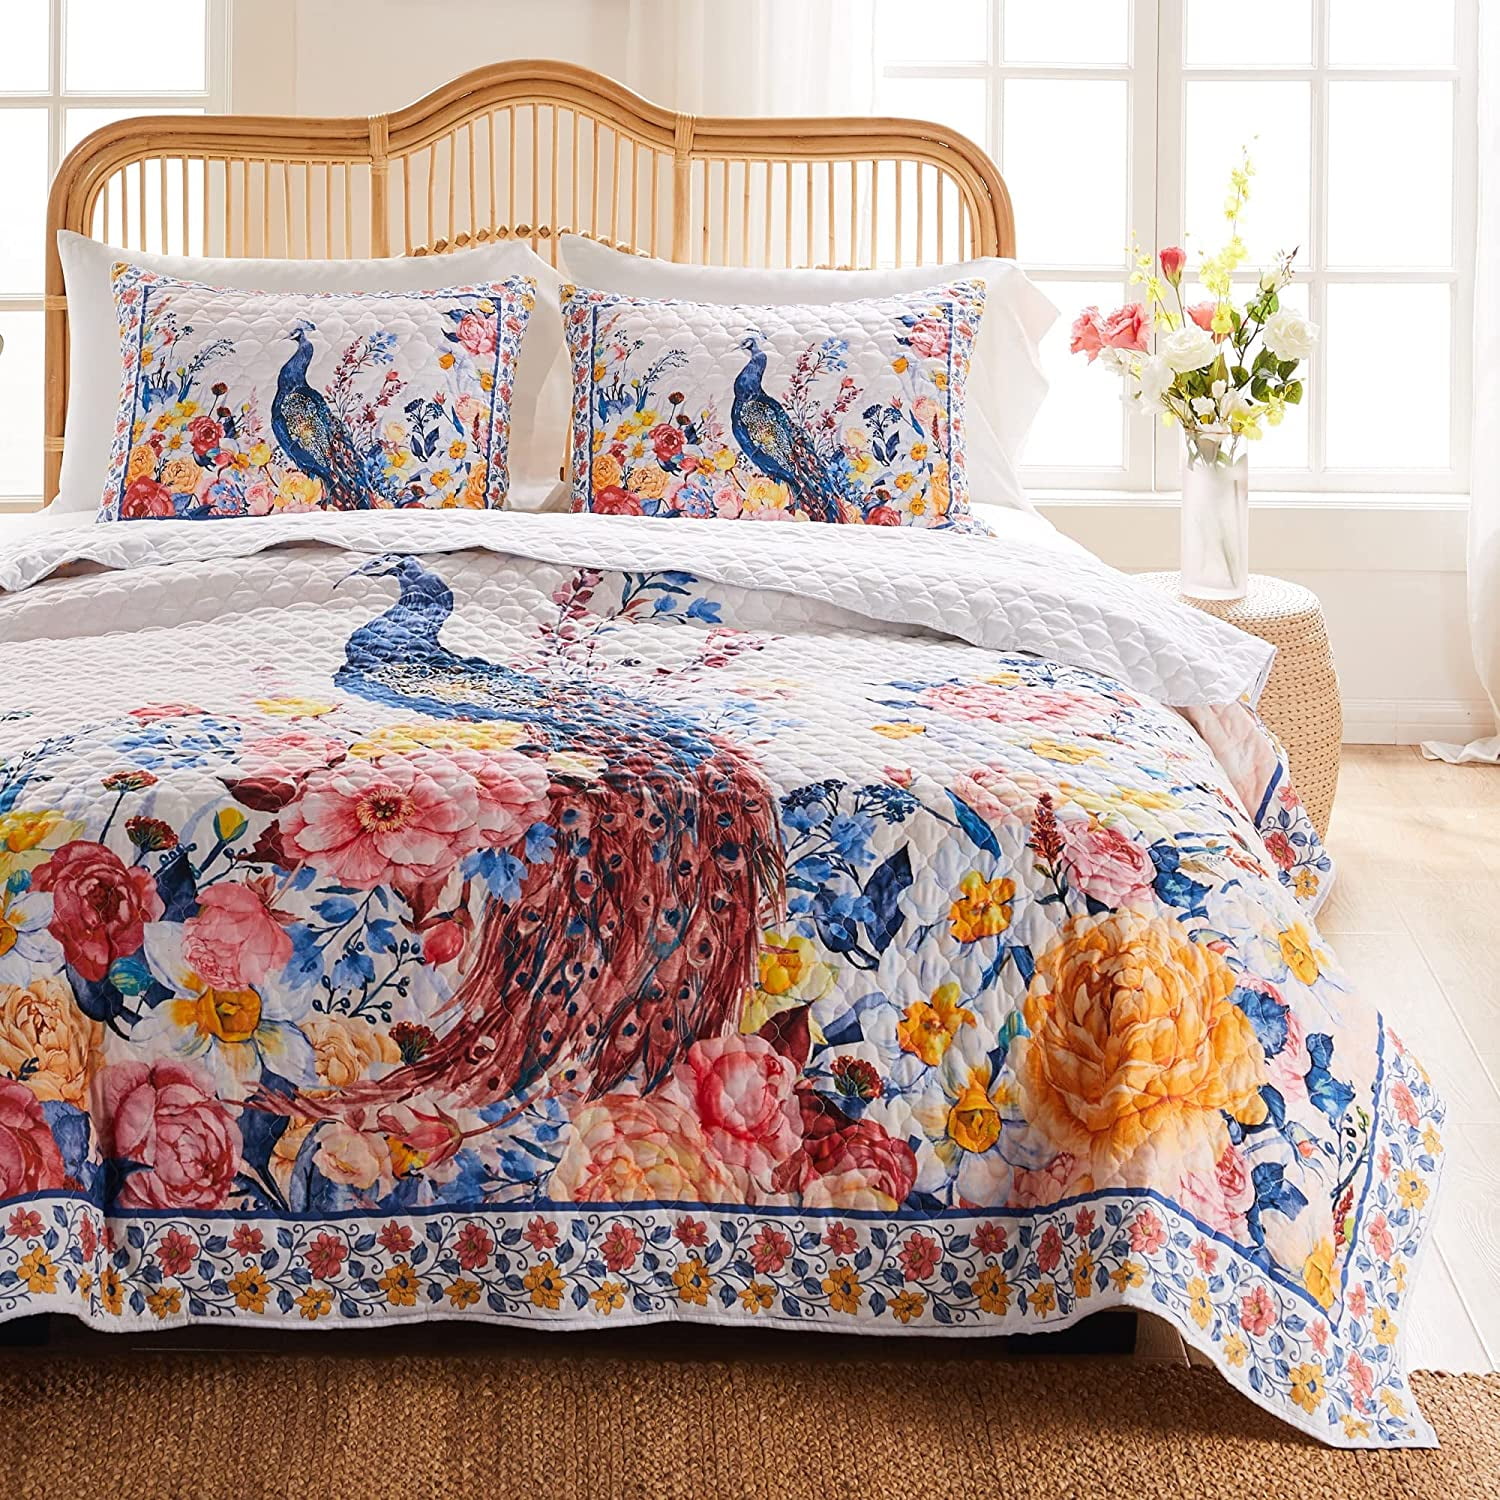 Details about    Indian Kantha Quilt Twin Size Flower Bedspread Reversible Blanket Throw Gudari 